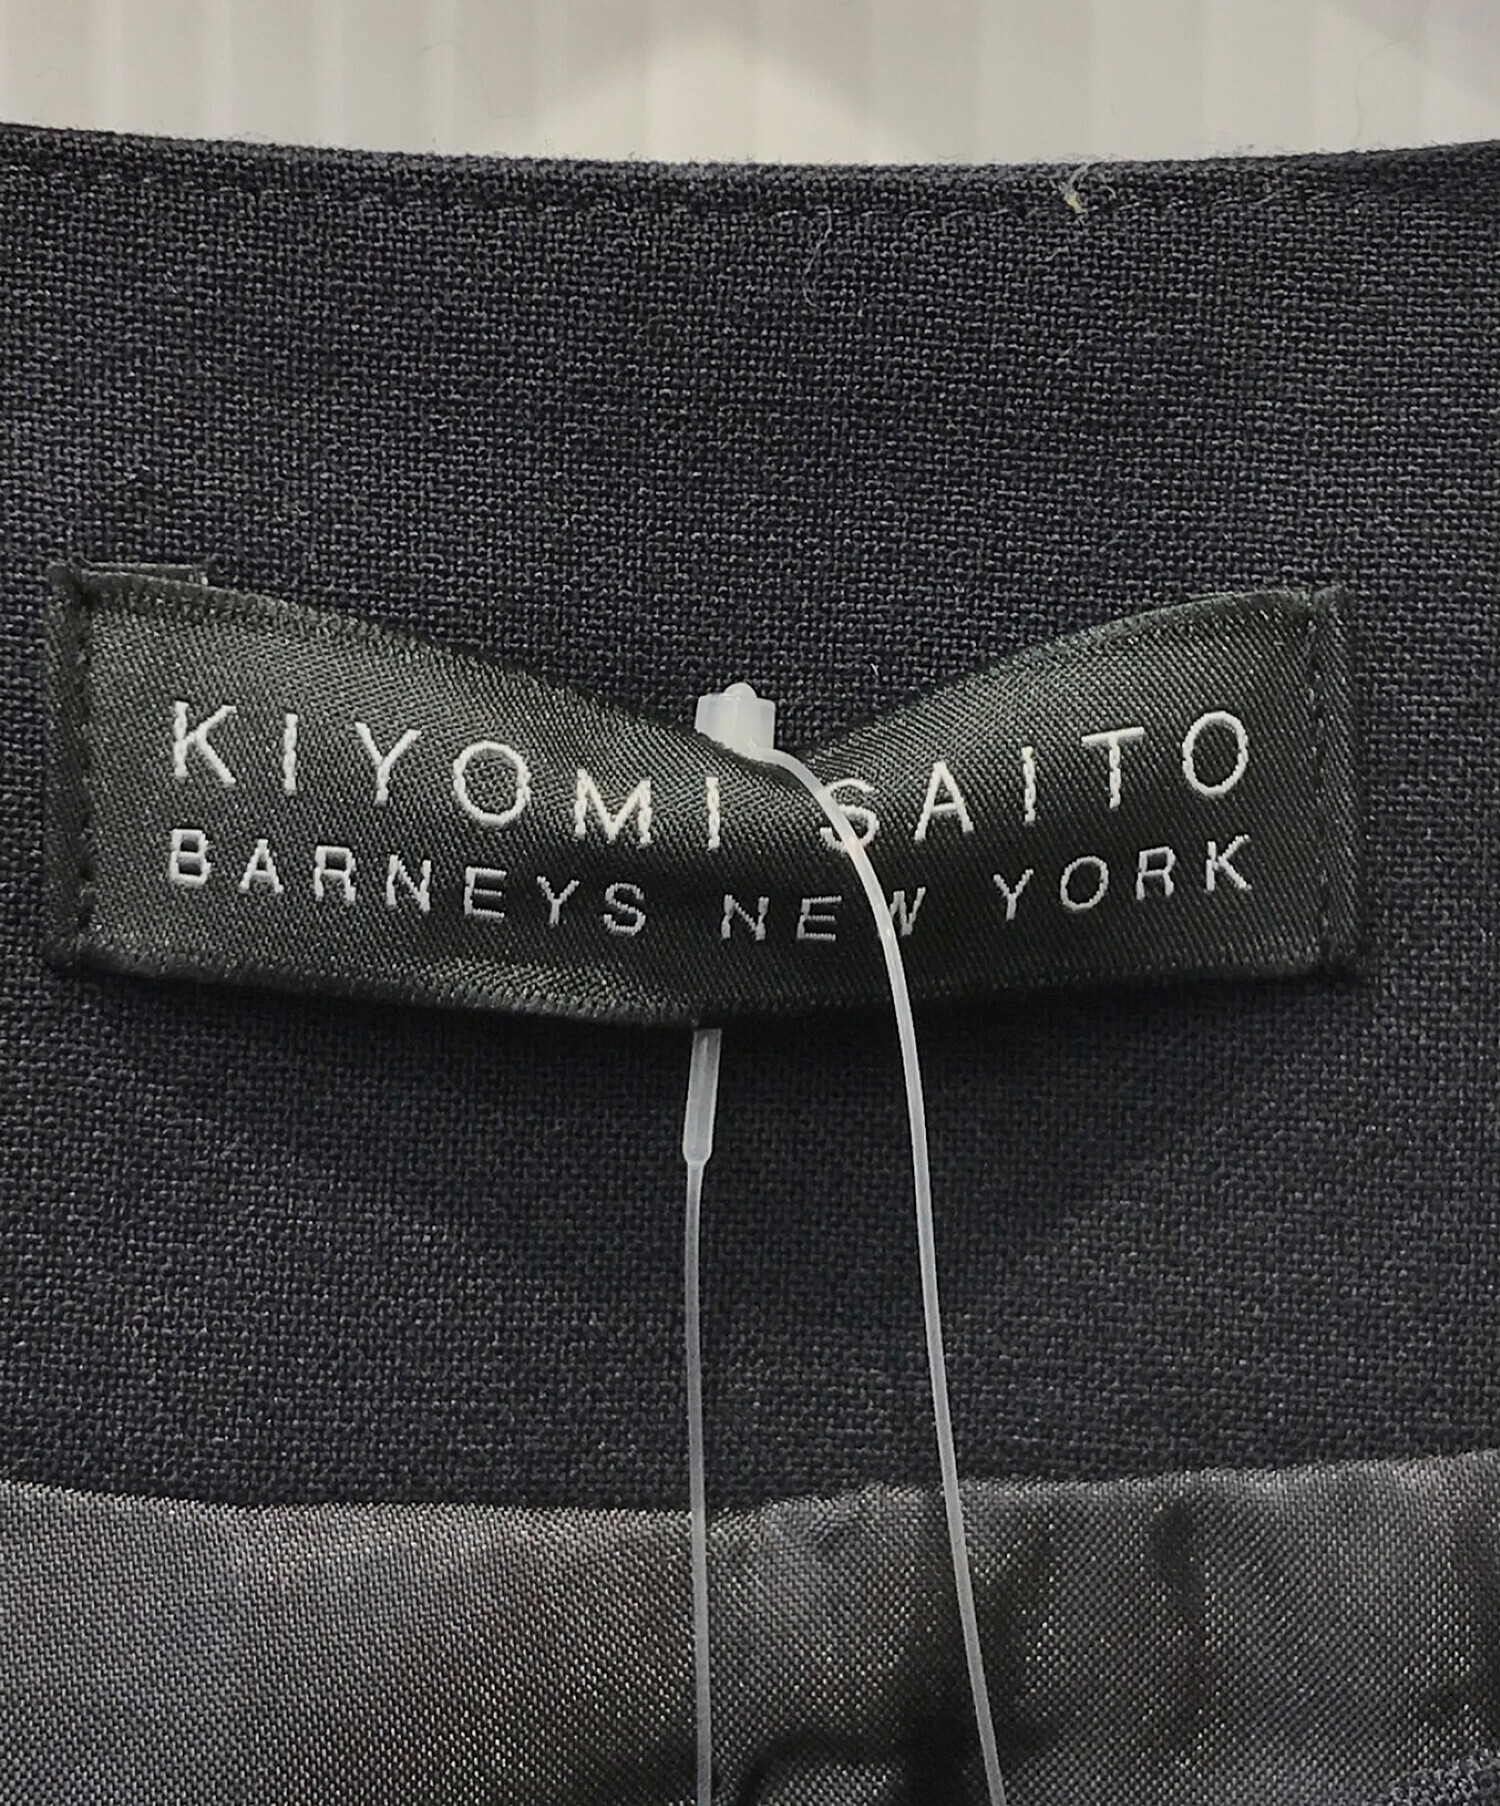 KIYOMI SAITO BARNEYS NEW YORK (キヨミ サイトウ バーニズニューヨーク) セットアップ ネイビー サイズ:38